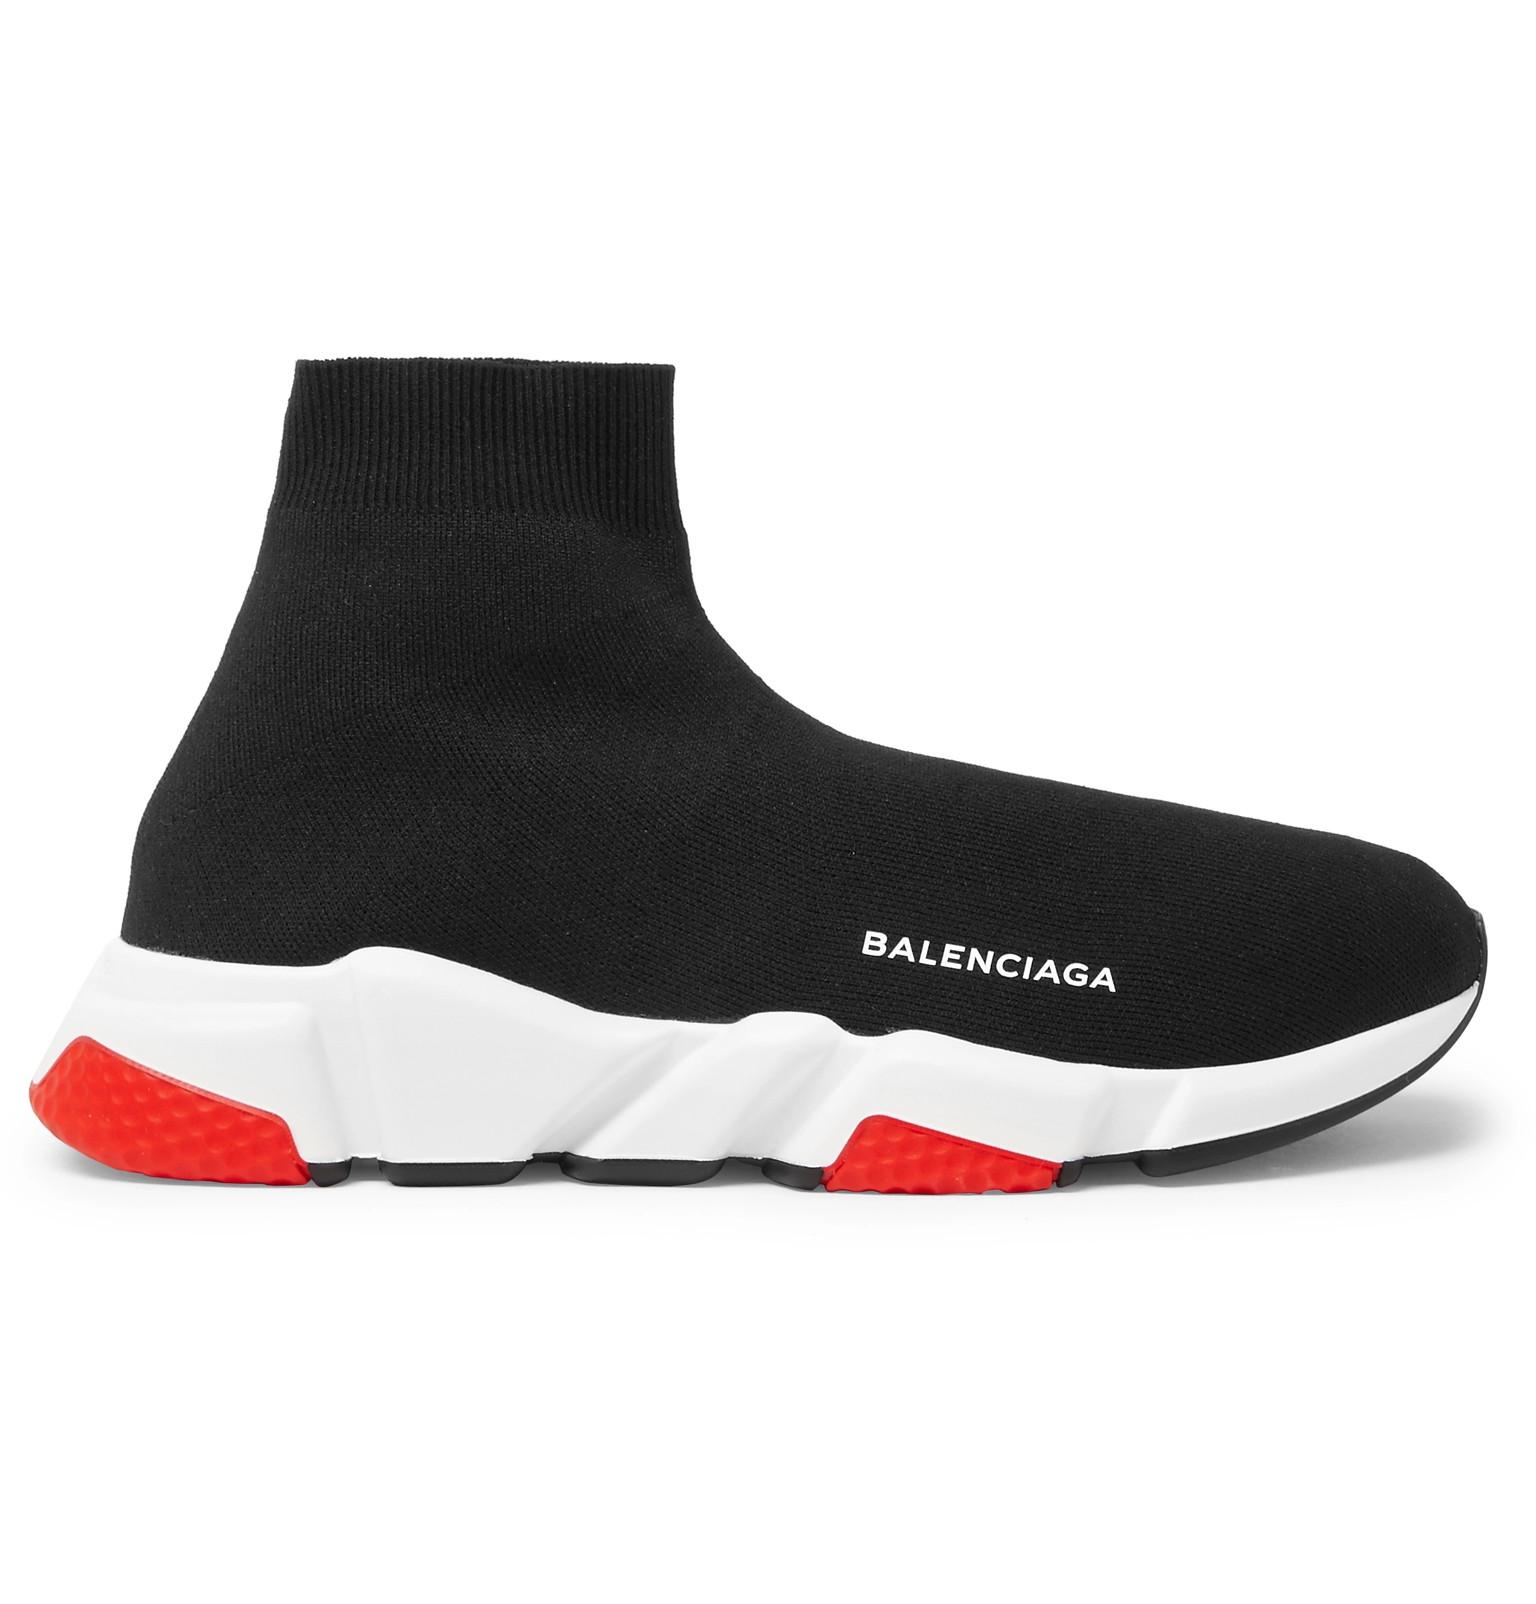 Balenciaga Speed Sneakers in Black for Men - Lyst